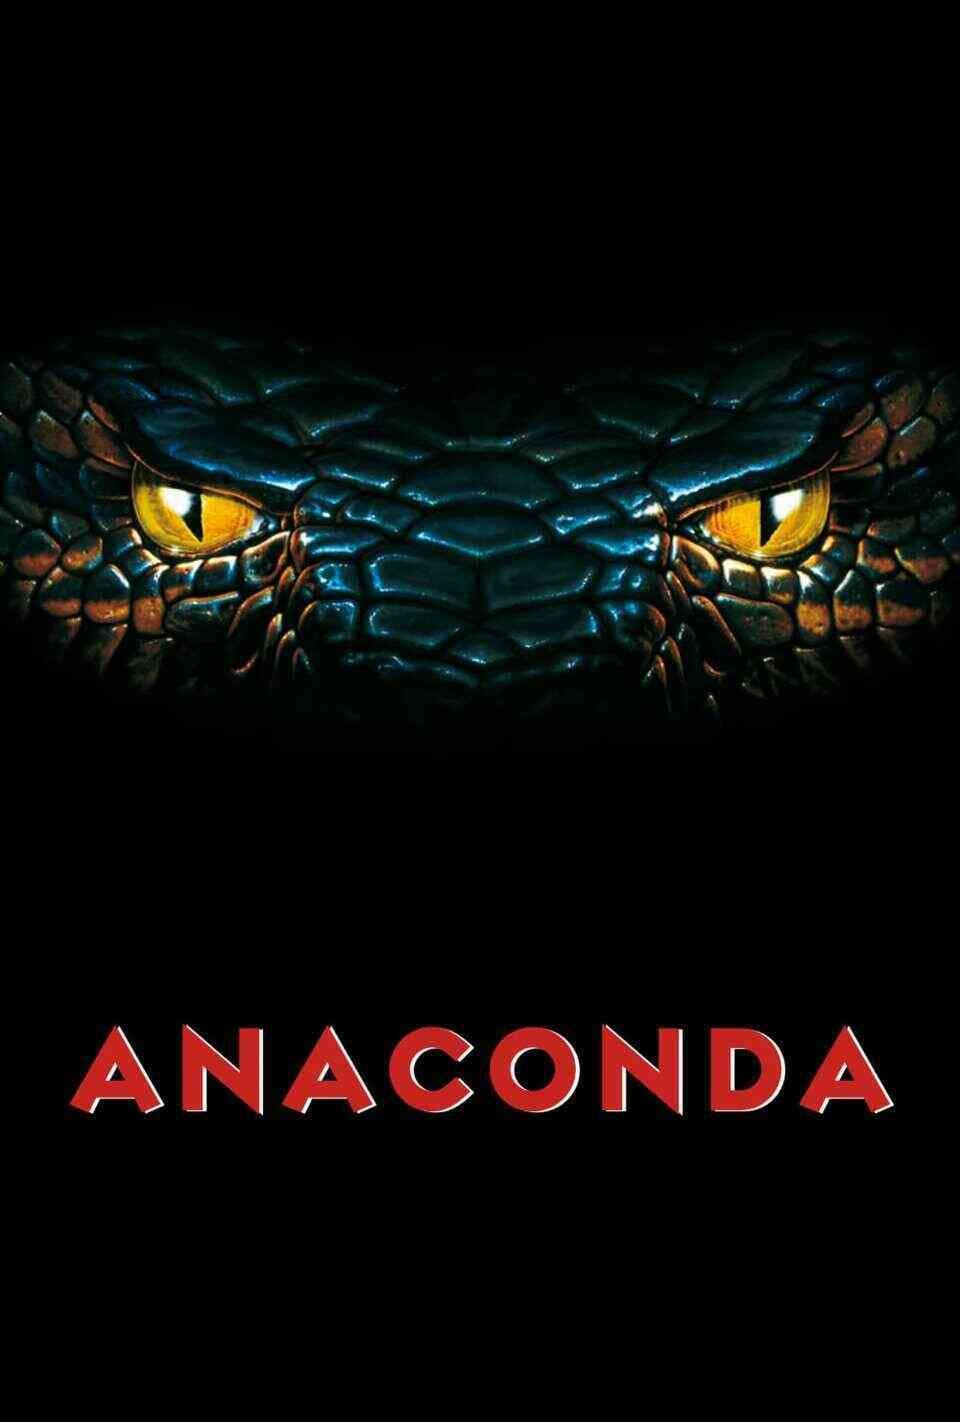 Read Anaconda screenplay (poster)